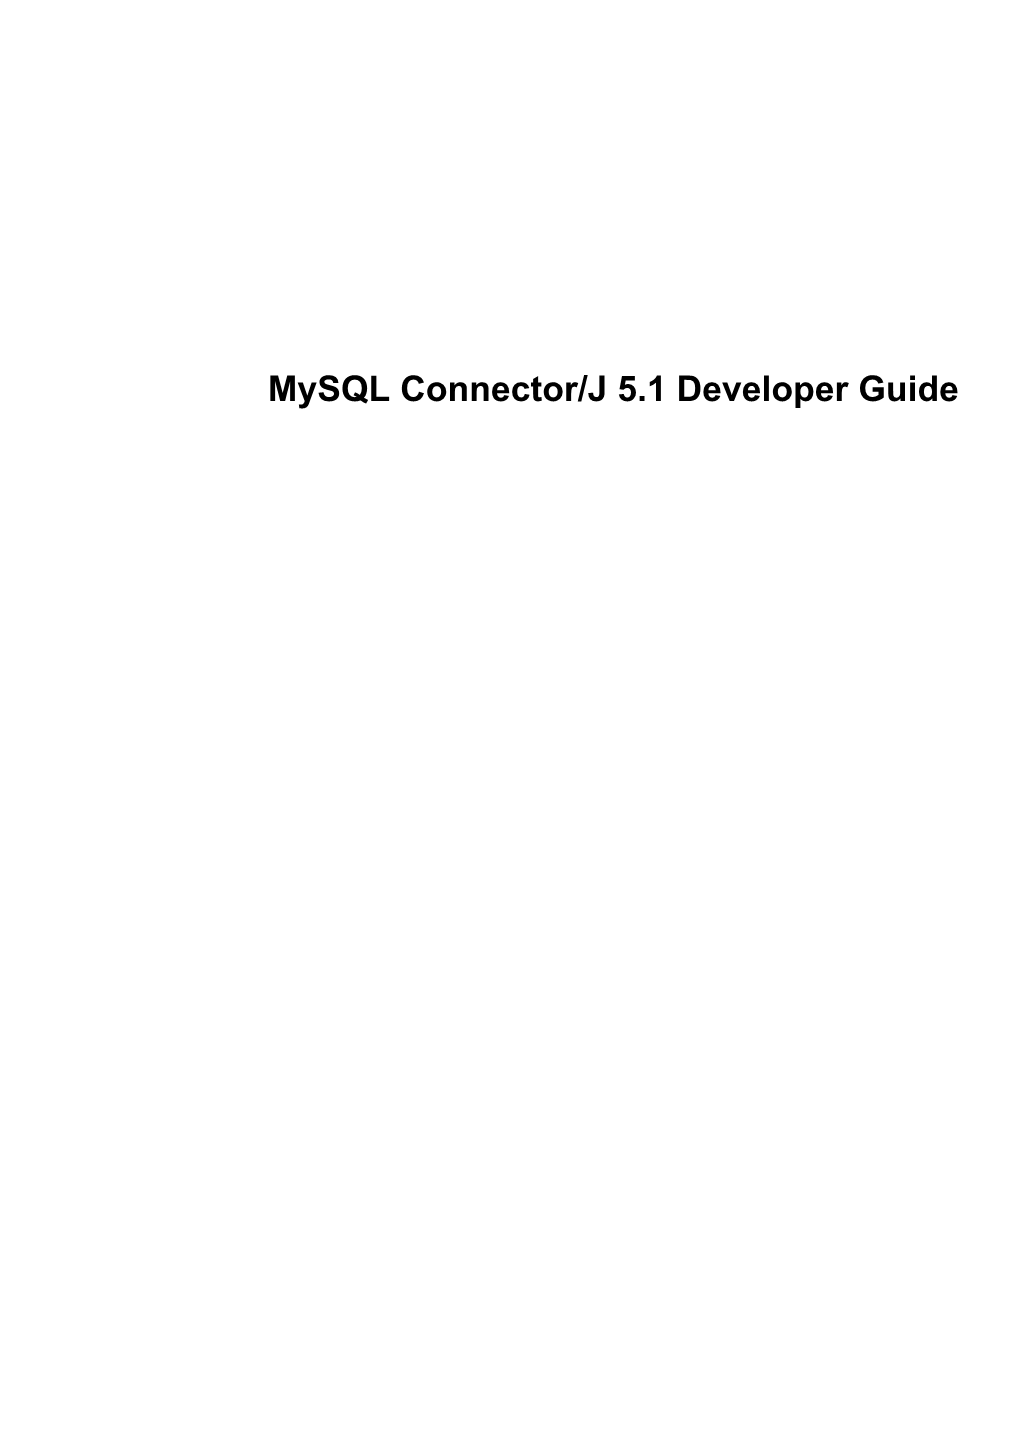 Mysql Connector/J 5.1 Developer Guide Abstract